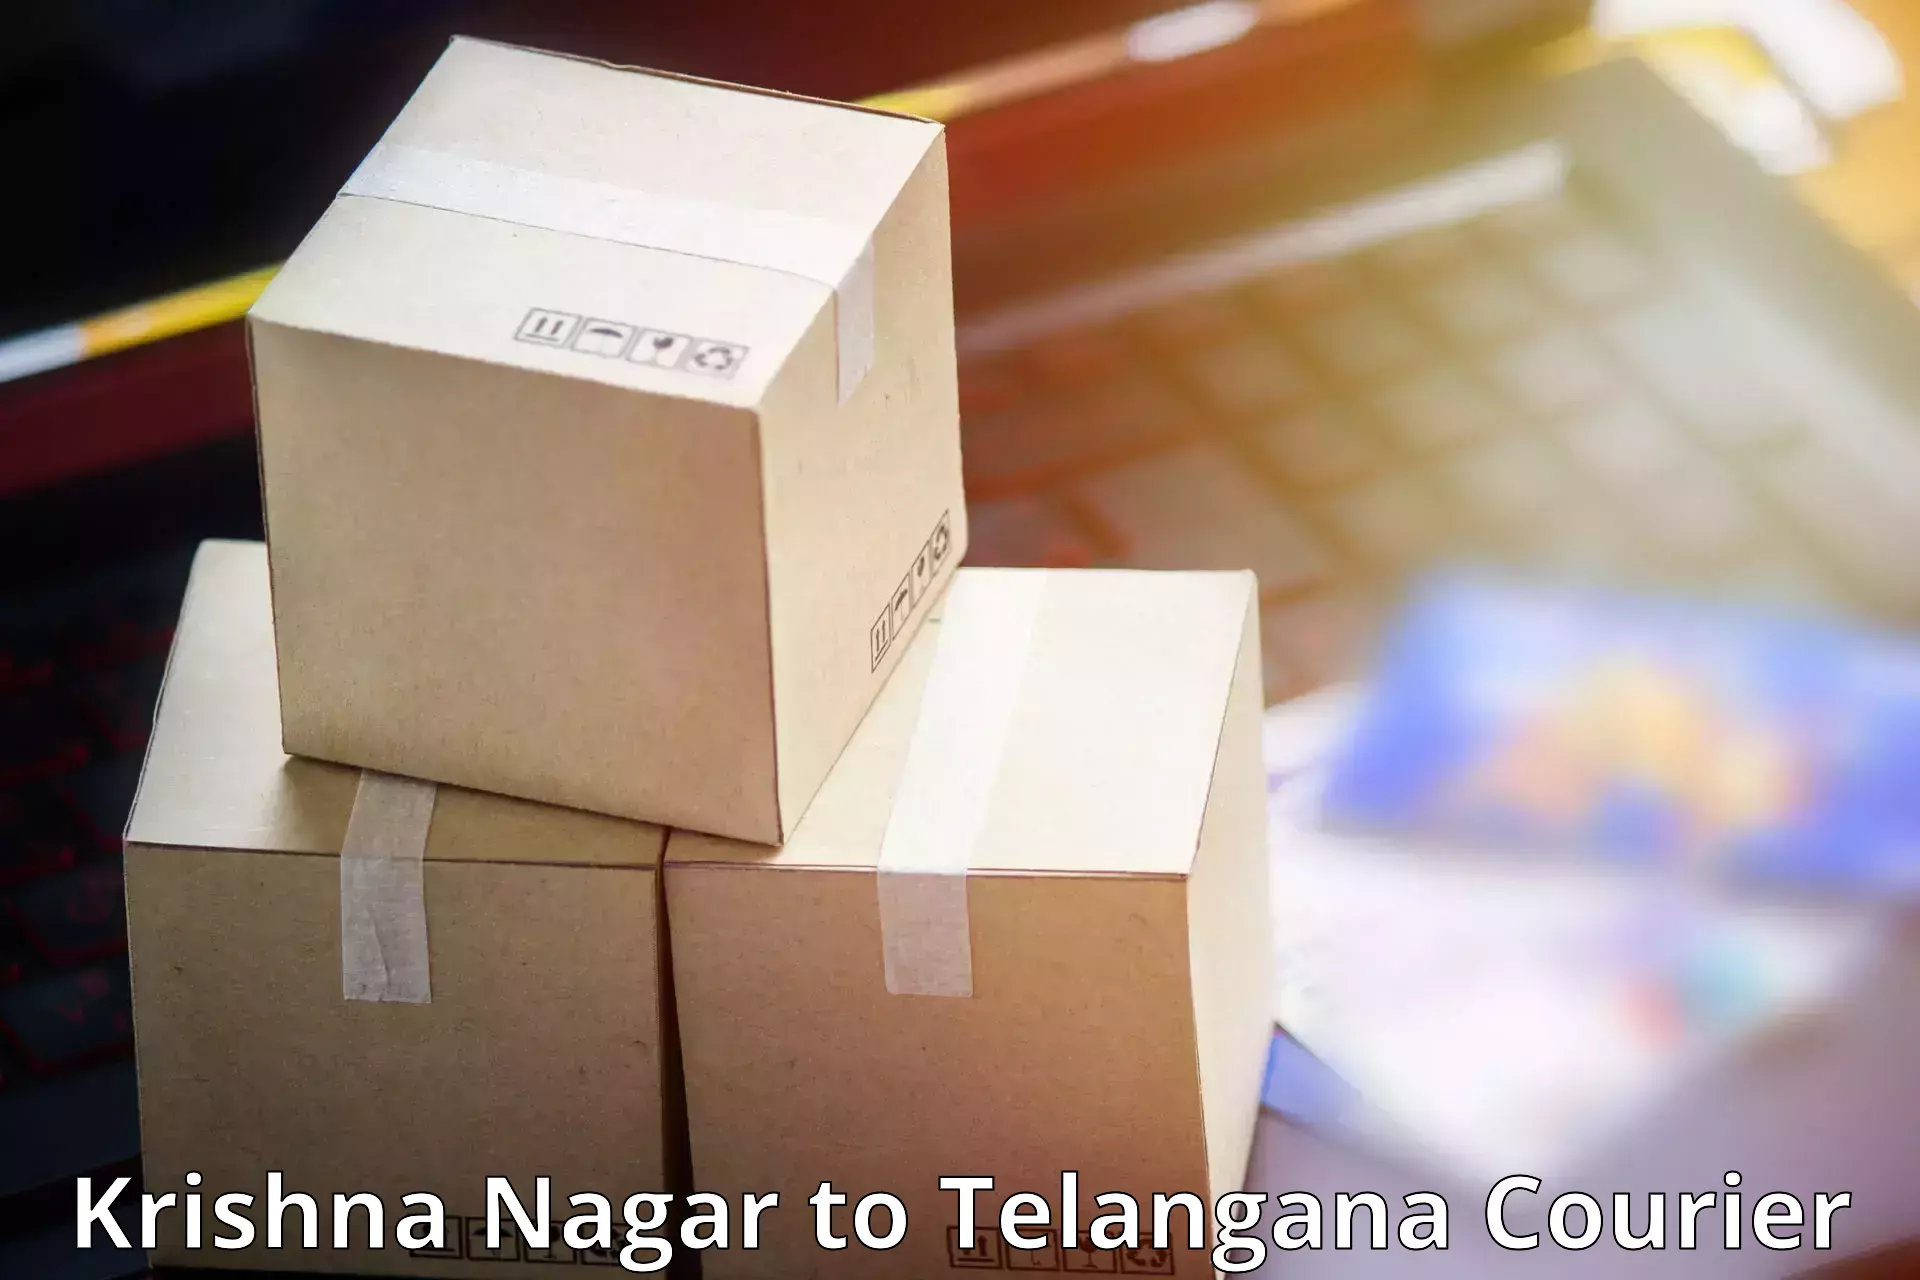 Corporate courier solutions Krishna Nagar to Madhira